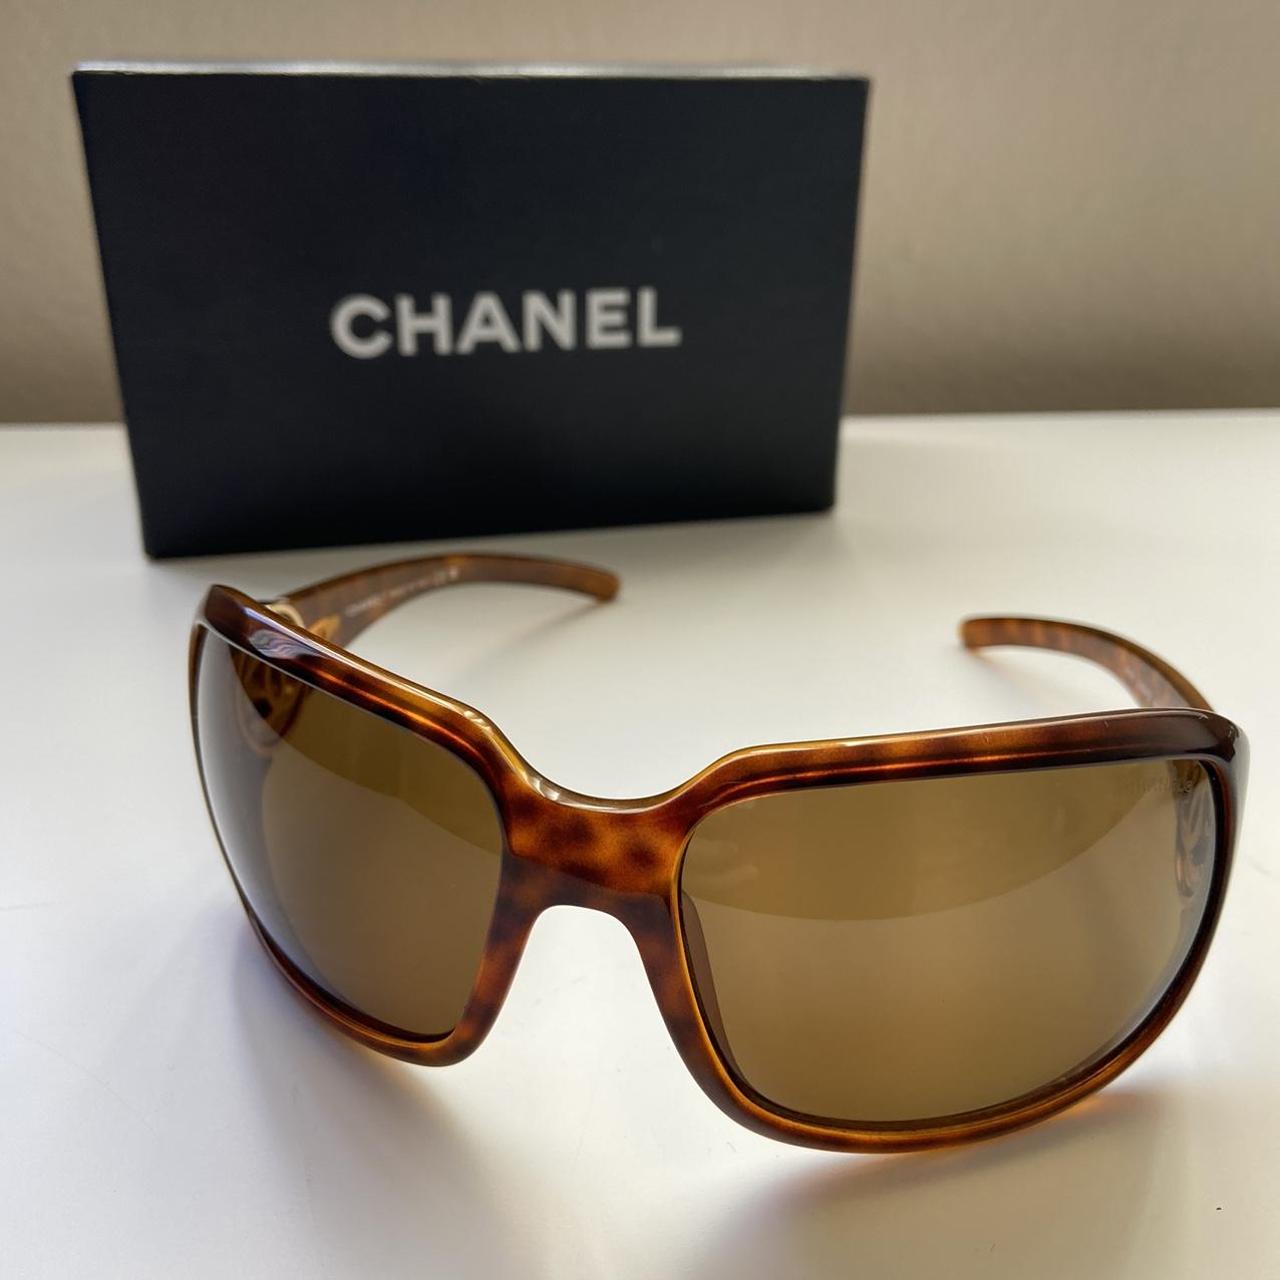 Authentic vintage Chanel sunglasses. Oversized